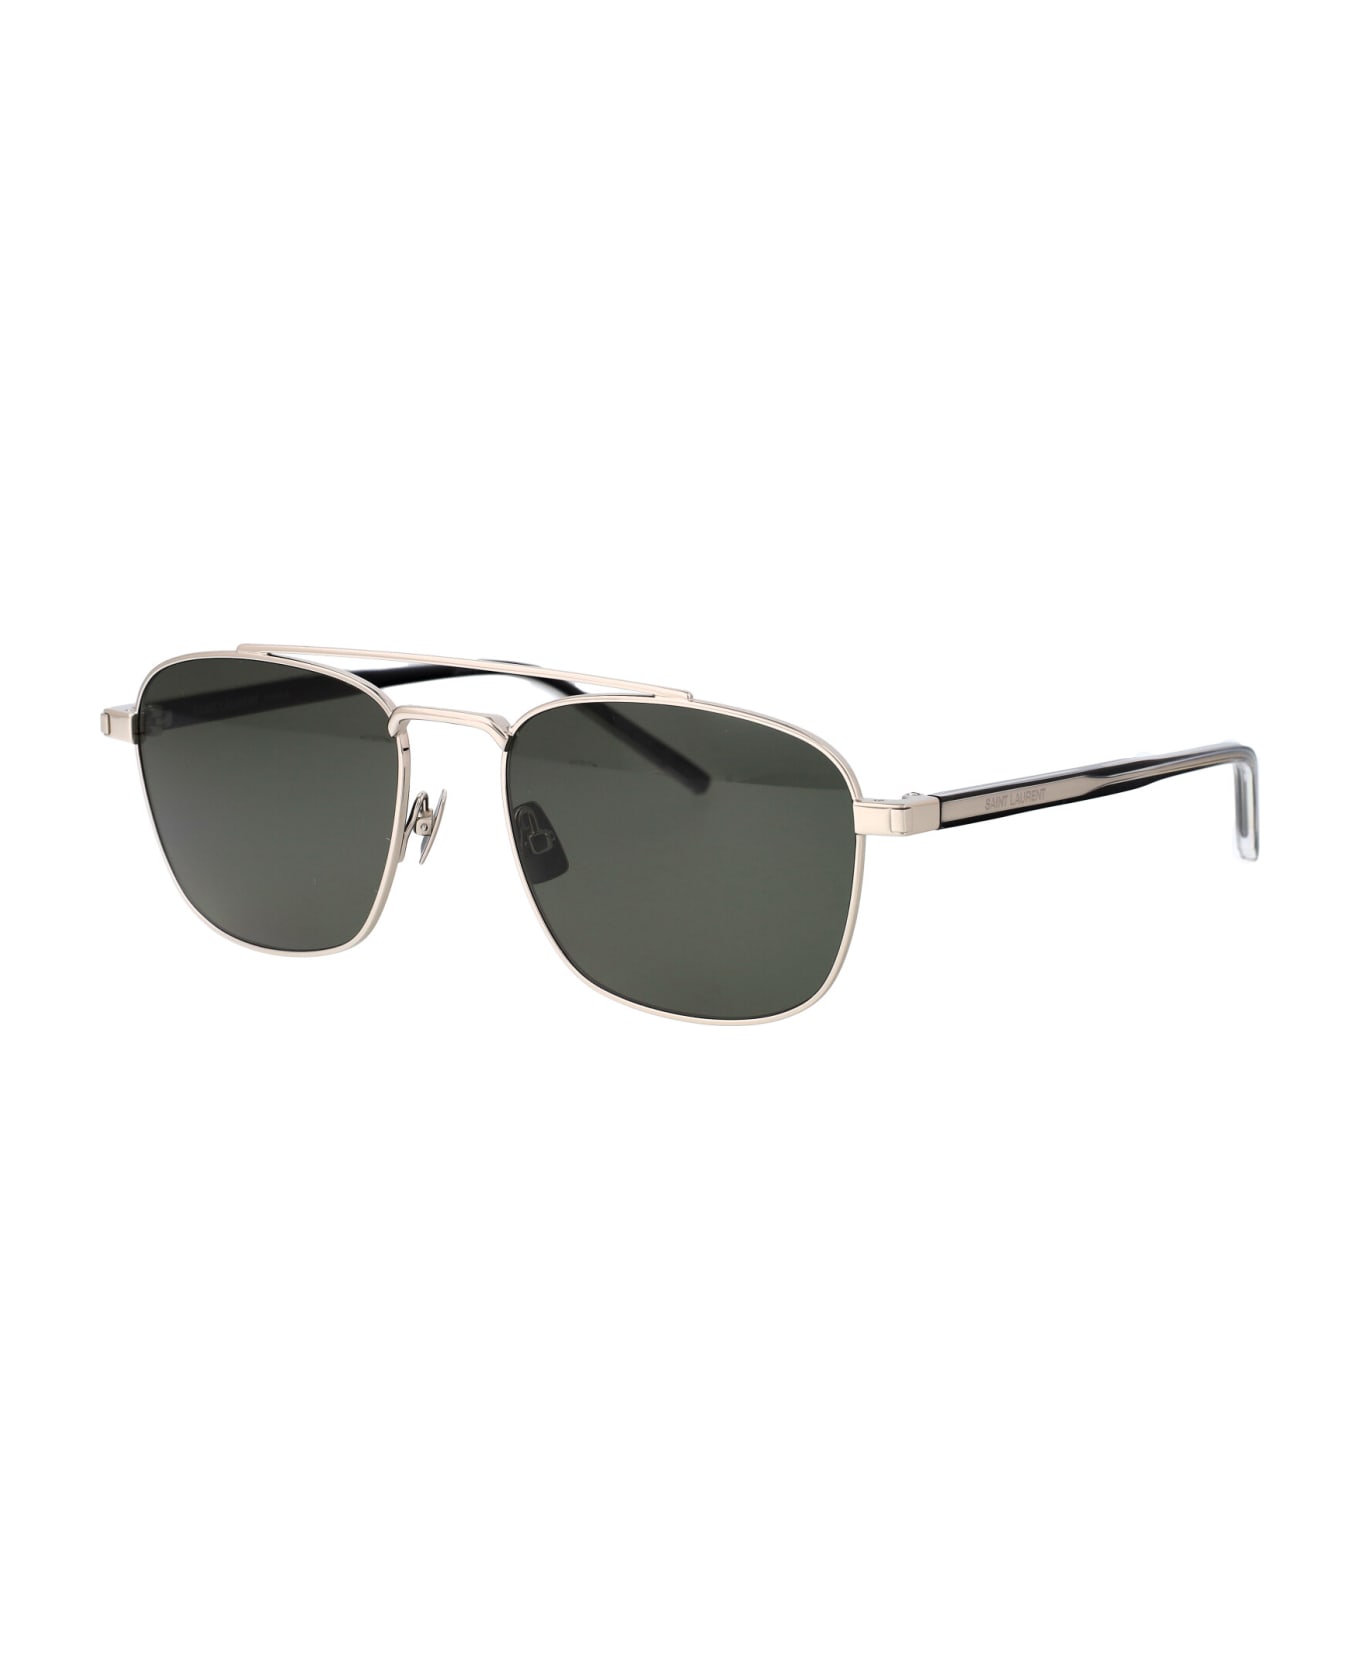 Saint Laurent Eyewear Sl 665 Sunglasses - 002 SILVER CRYSTAL GREY